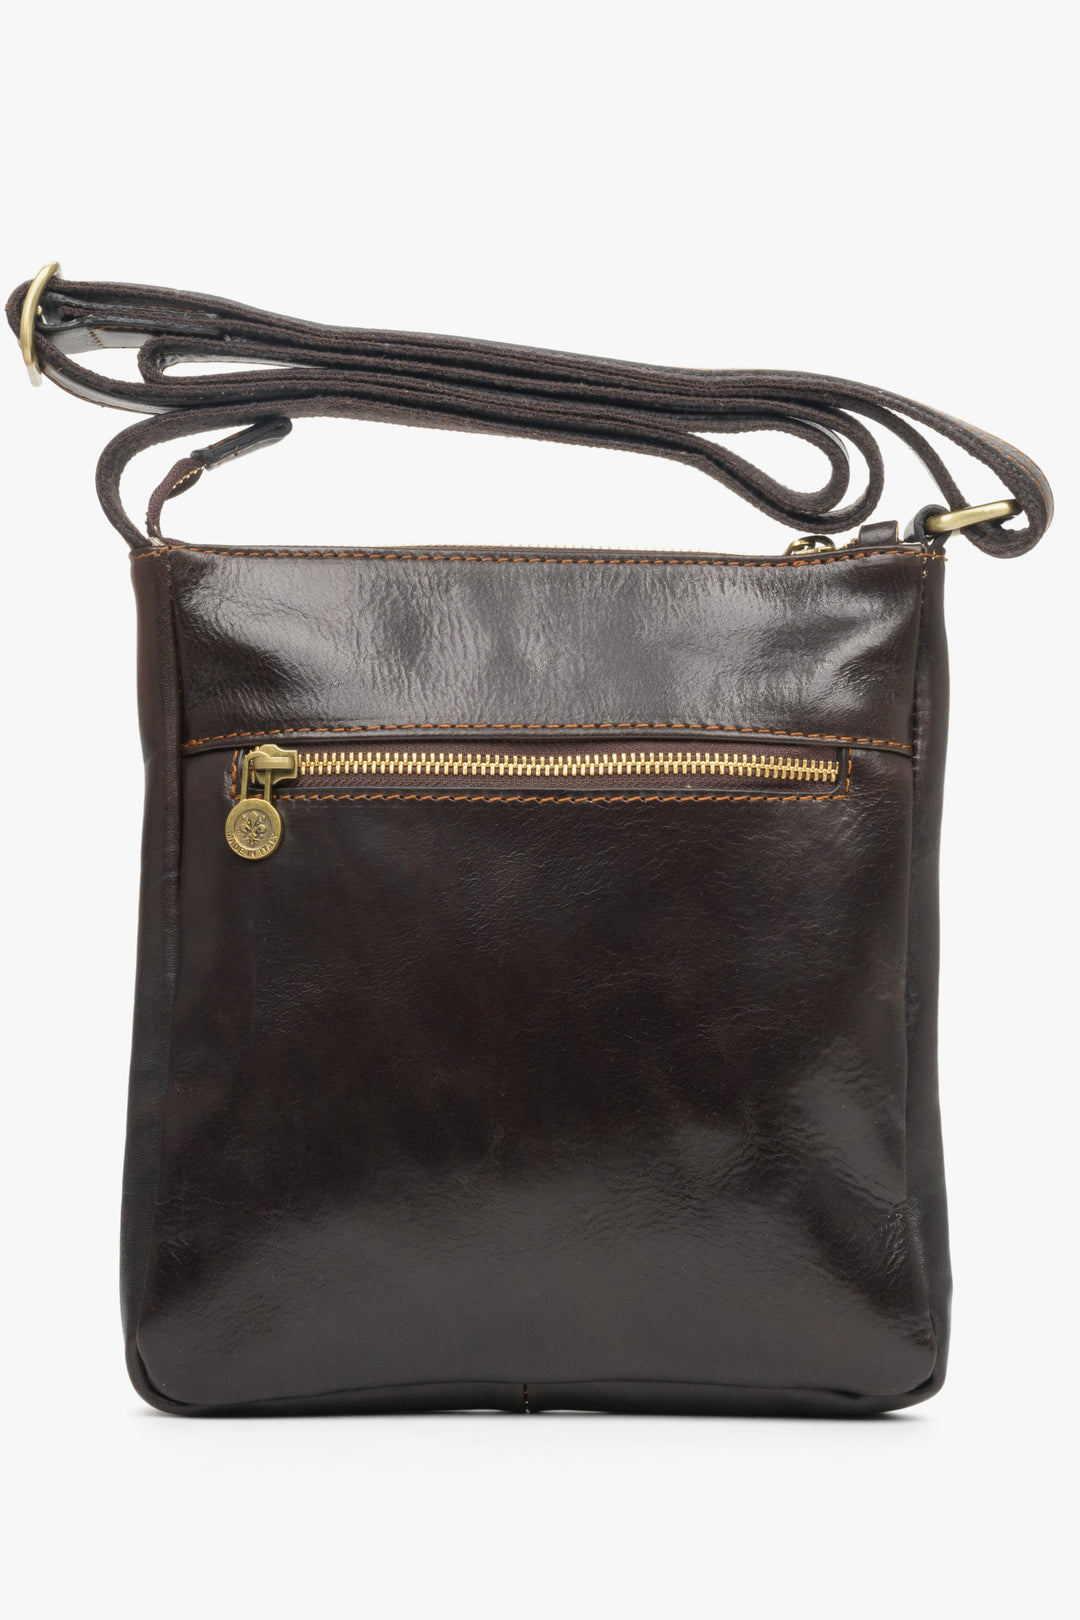 Men's small dark brown shoulder bag, perfect for fall - back view.